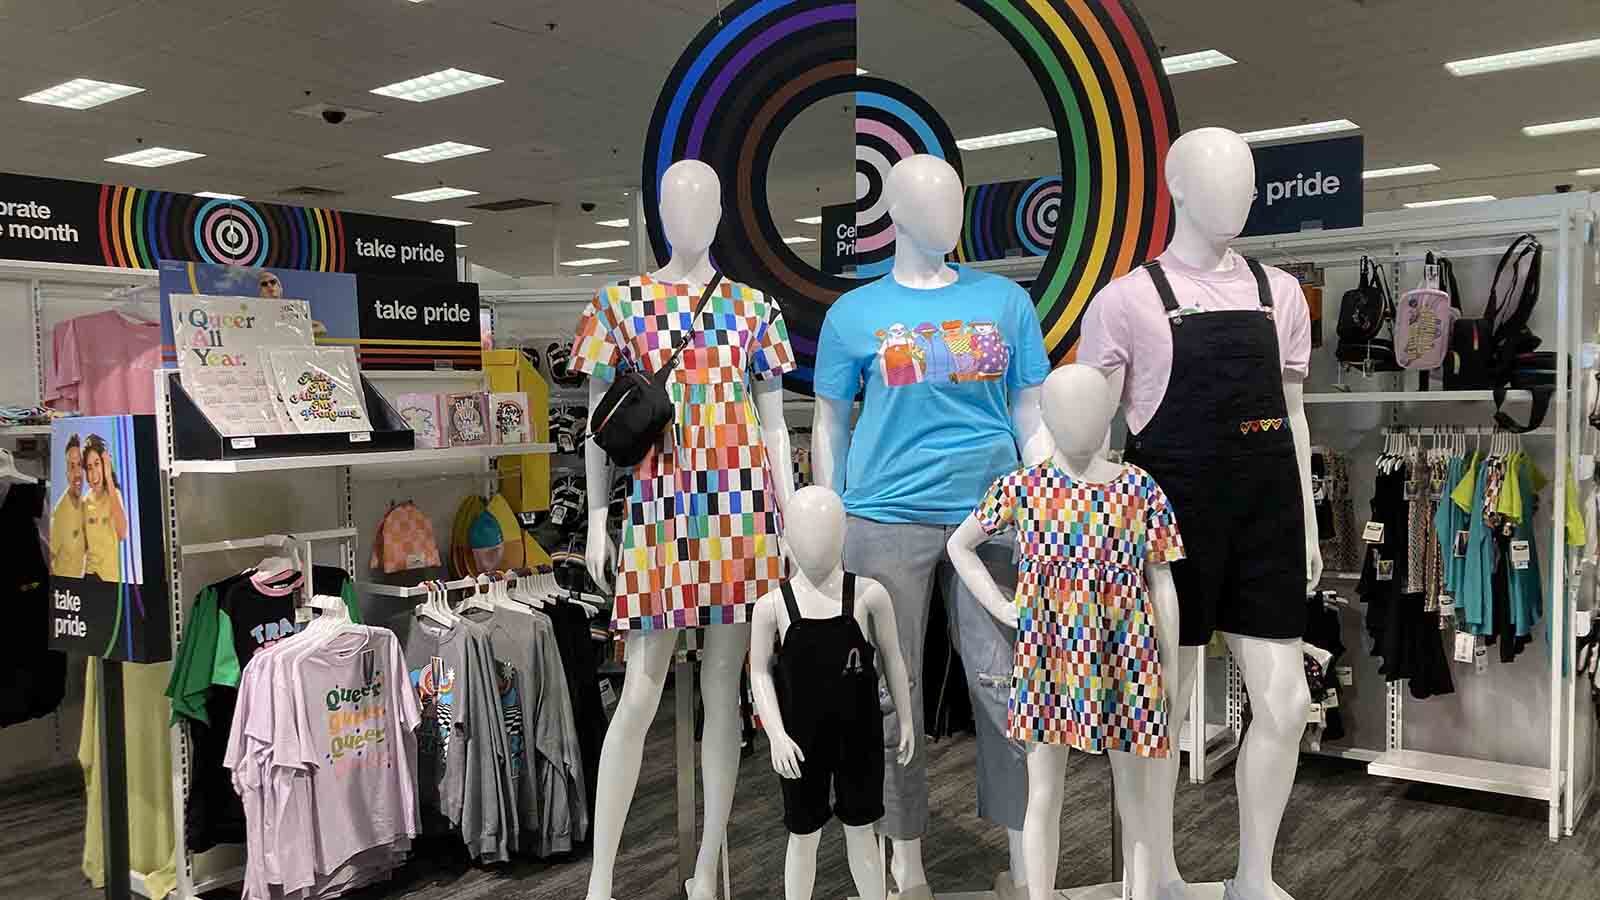 Kohl's facing boycott calls over Pride onesie for babies